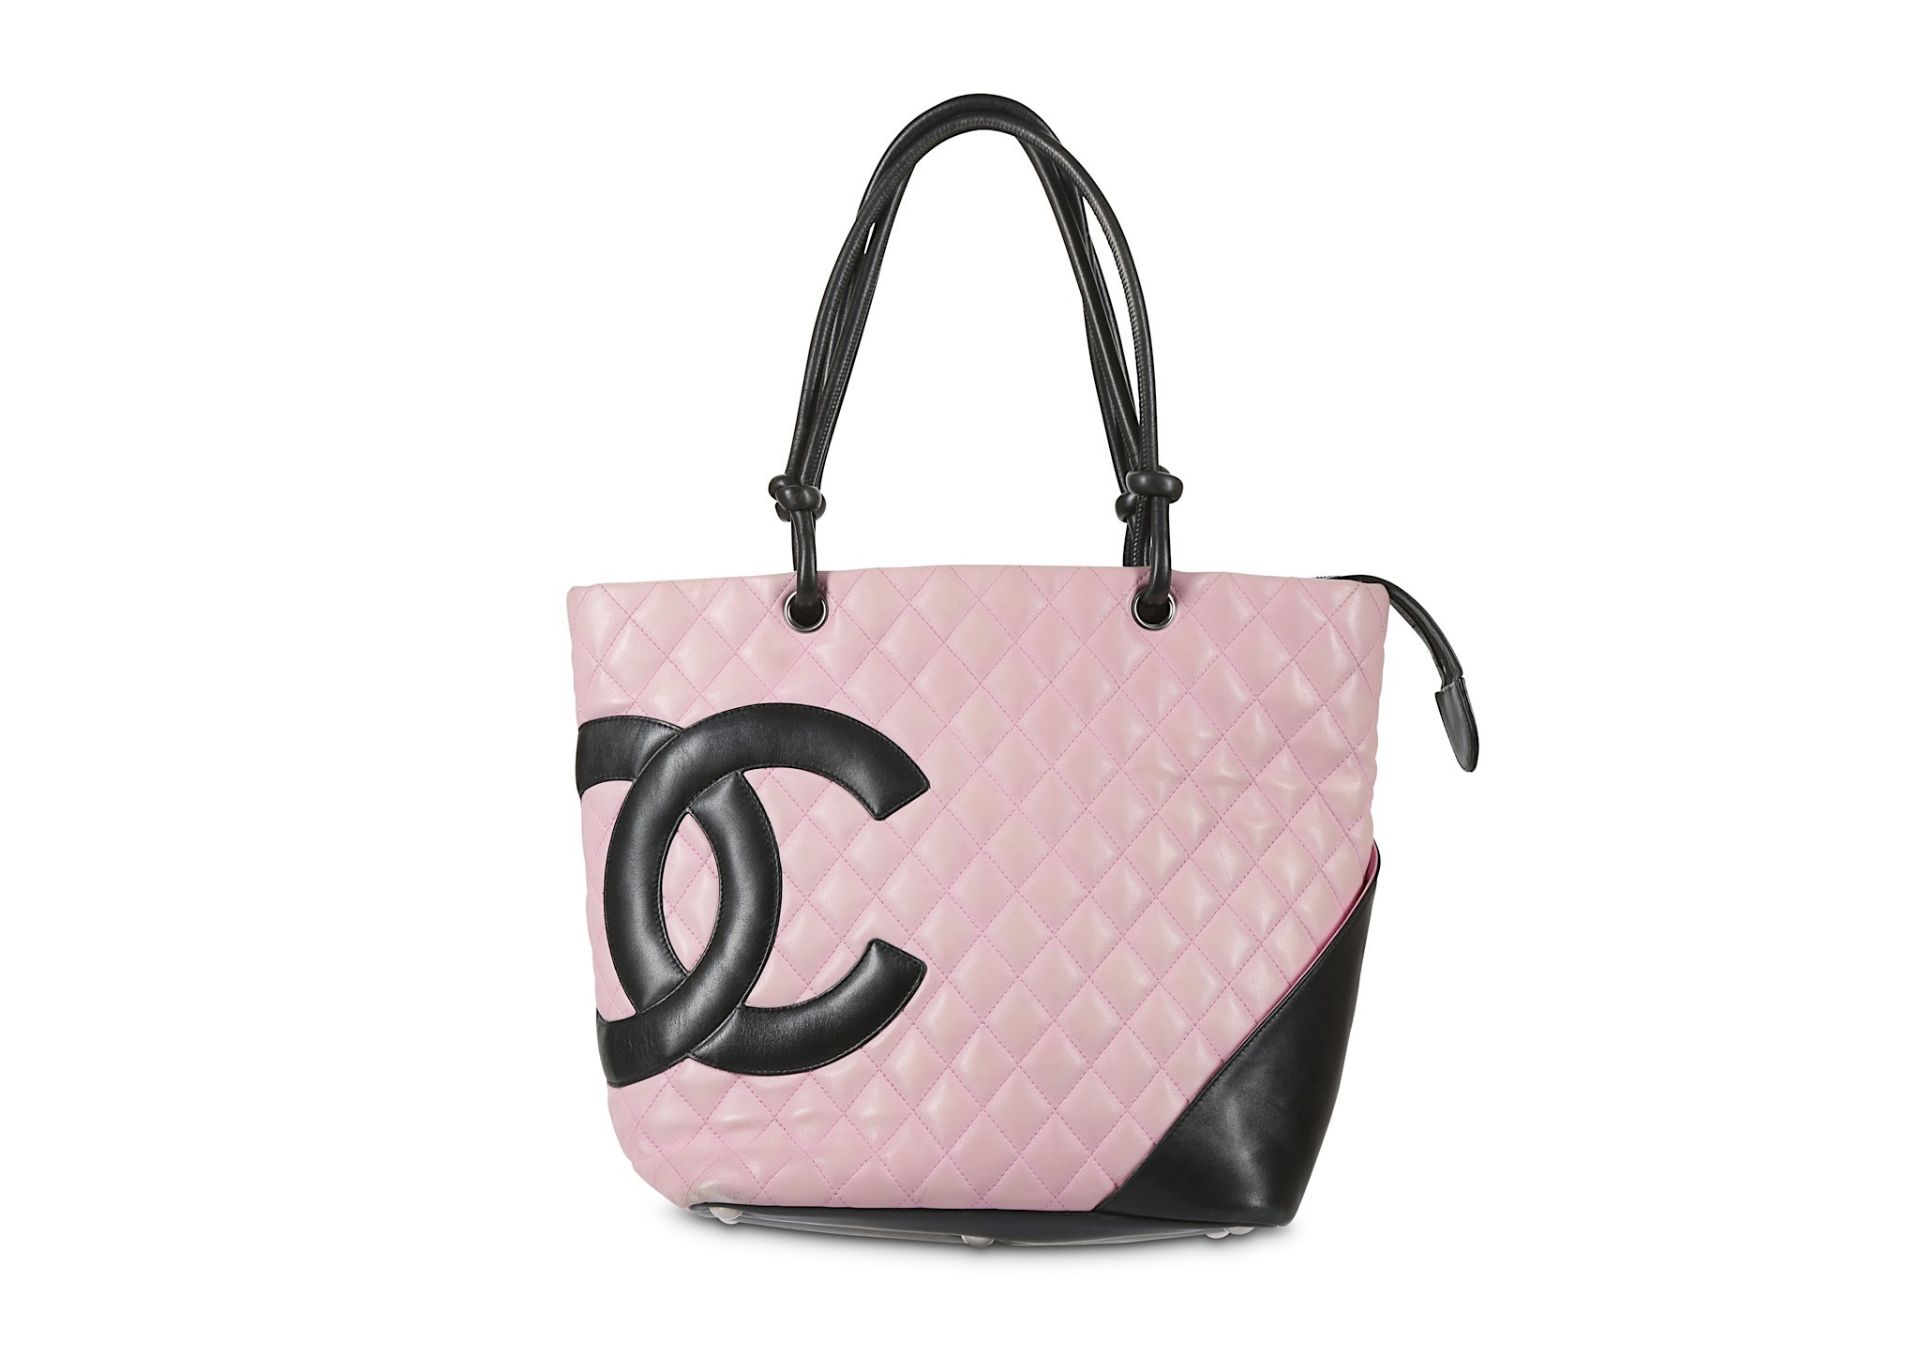 Chanel Large Cambon Ligne Pink Shopper, c. 2004-05